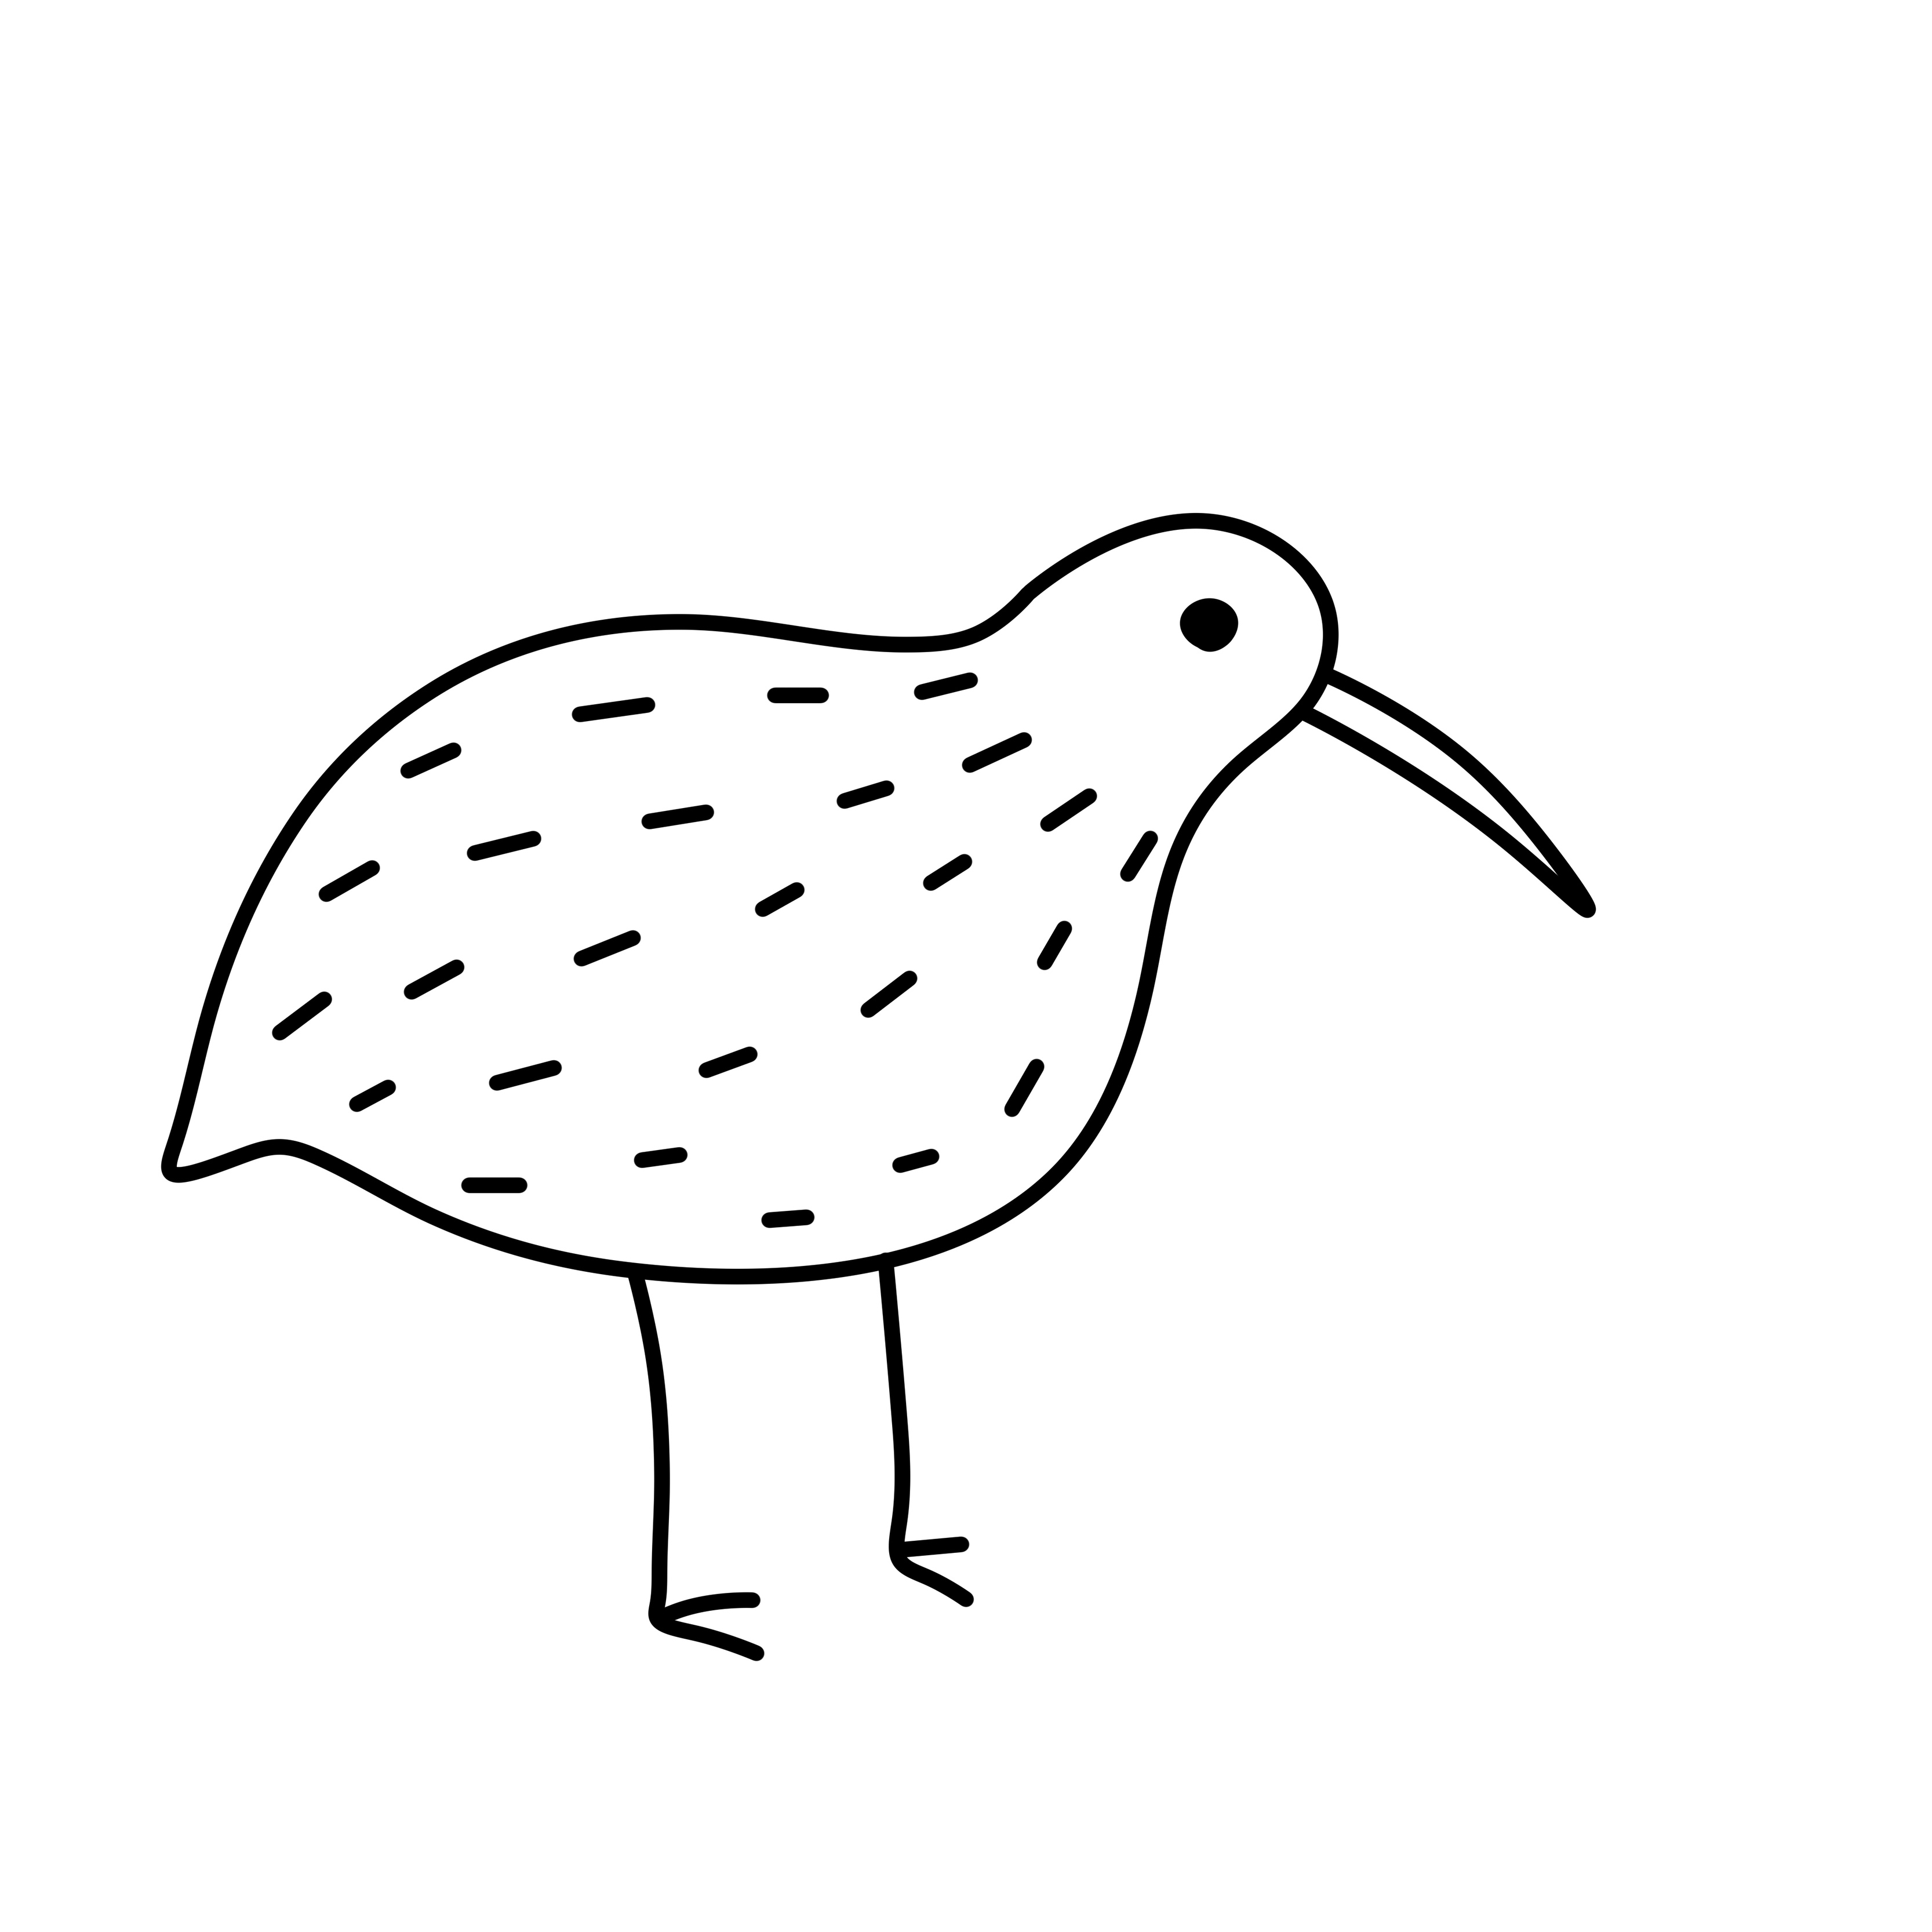 pájaro del kiwi. raro animal australiano. estilo de dibujo en blanco y  negro. 5362196 Vector en Vecteezy